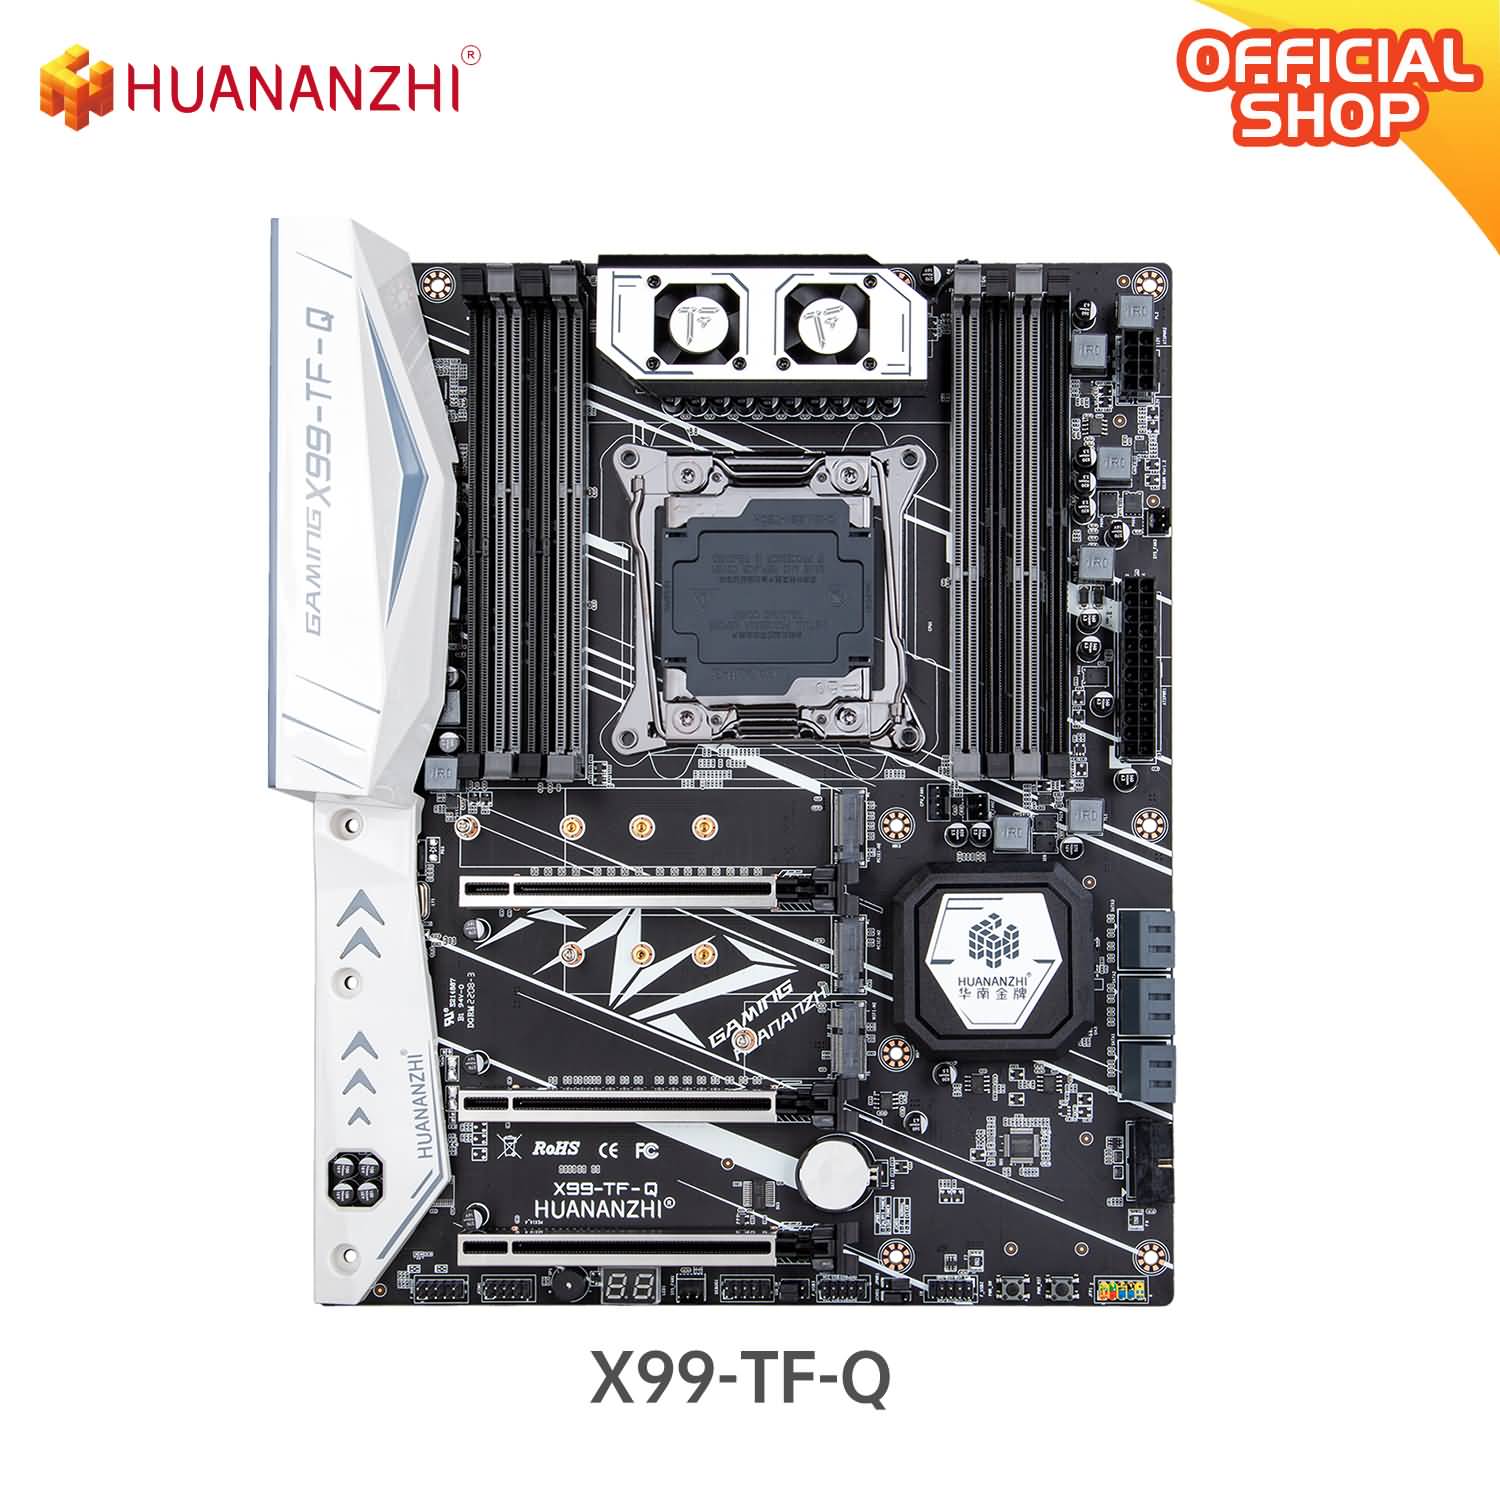 Buy Huananzhi X99 Tf Q X99 Motherboard Online